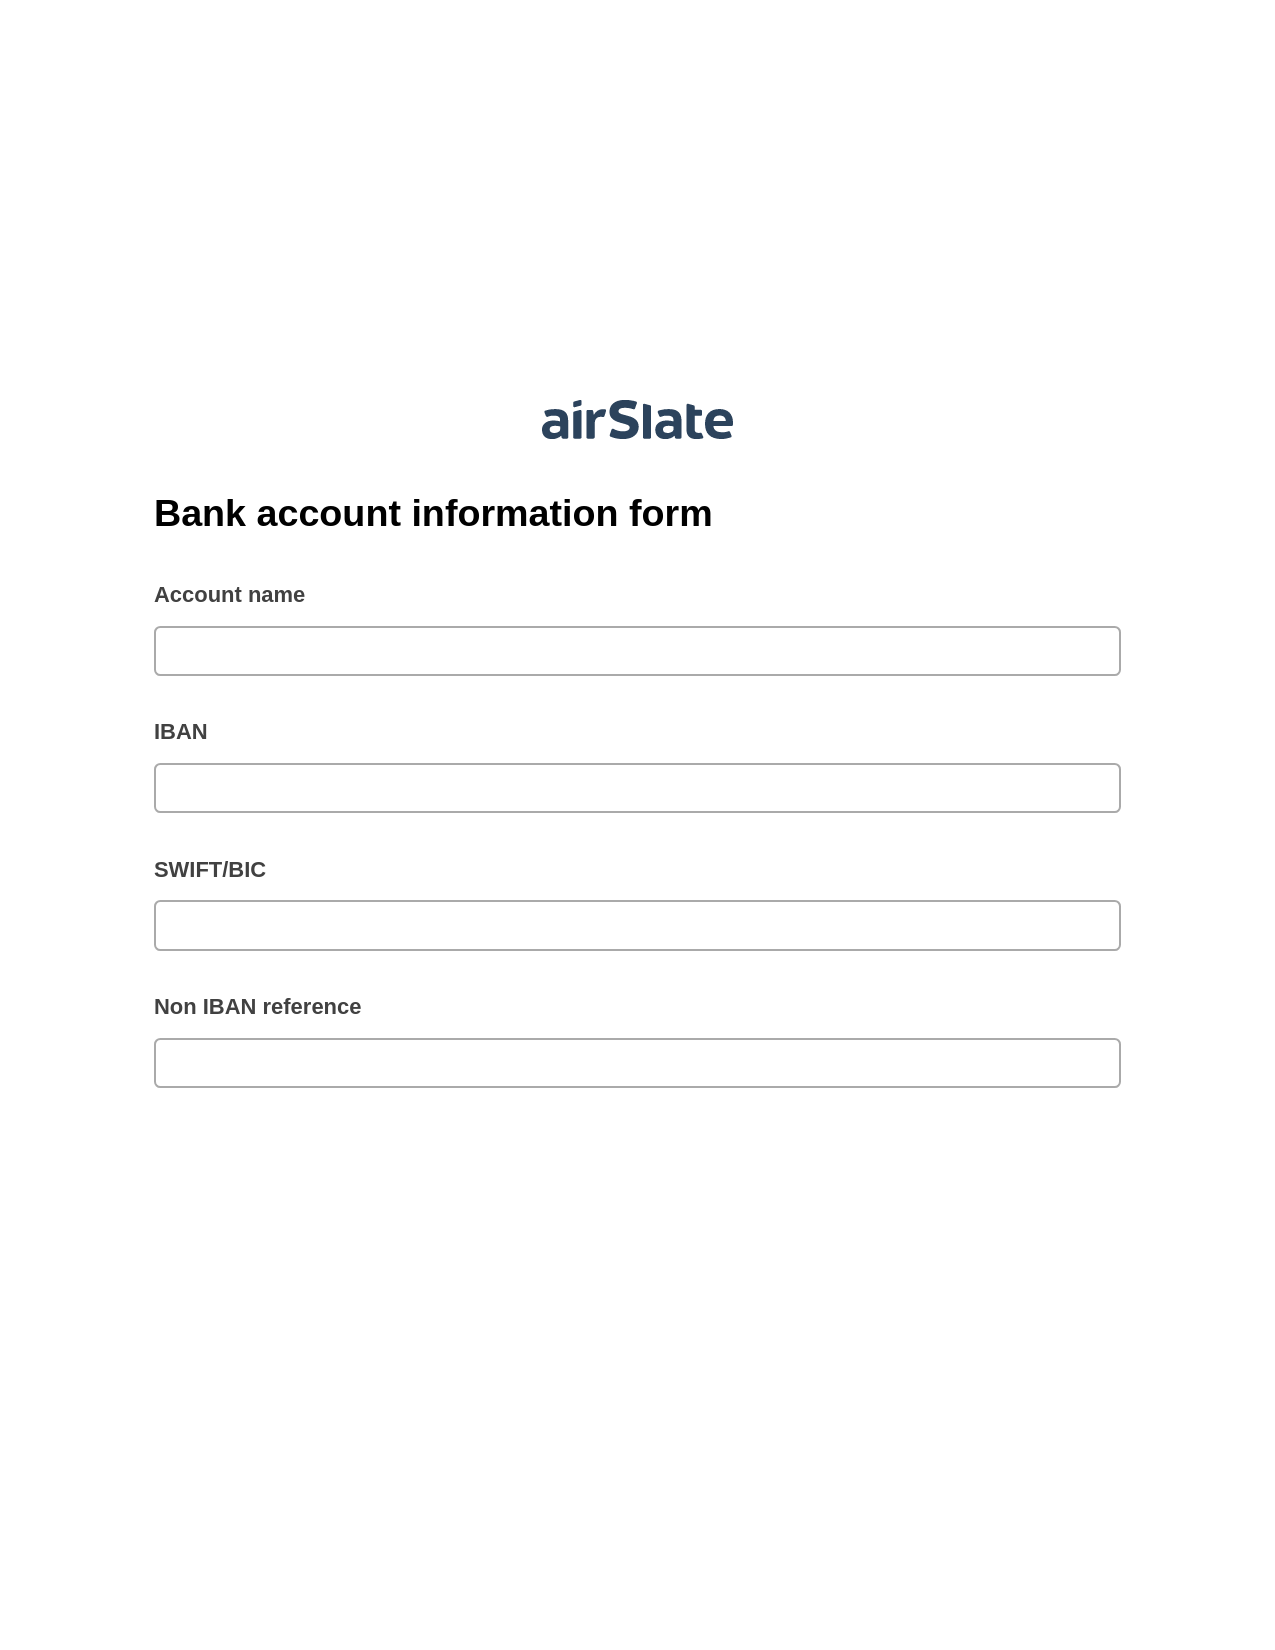 Multirole Bank account information form Pre-fill from Google Sheet Dropdown Options Bot, Audit Trail Bot, Slack Two-Way Binding Bot